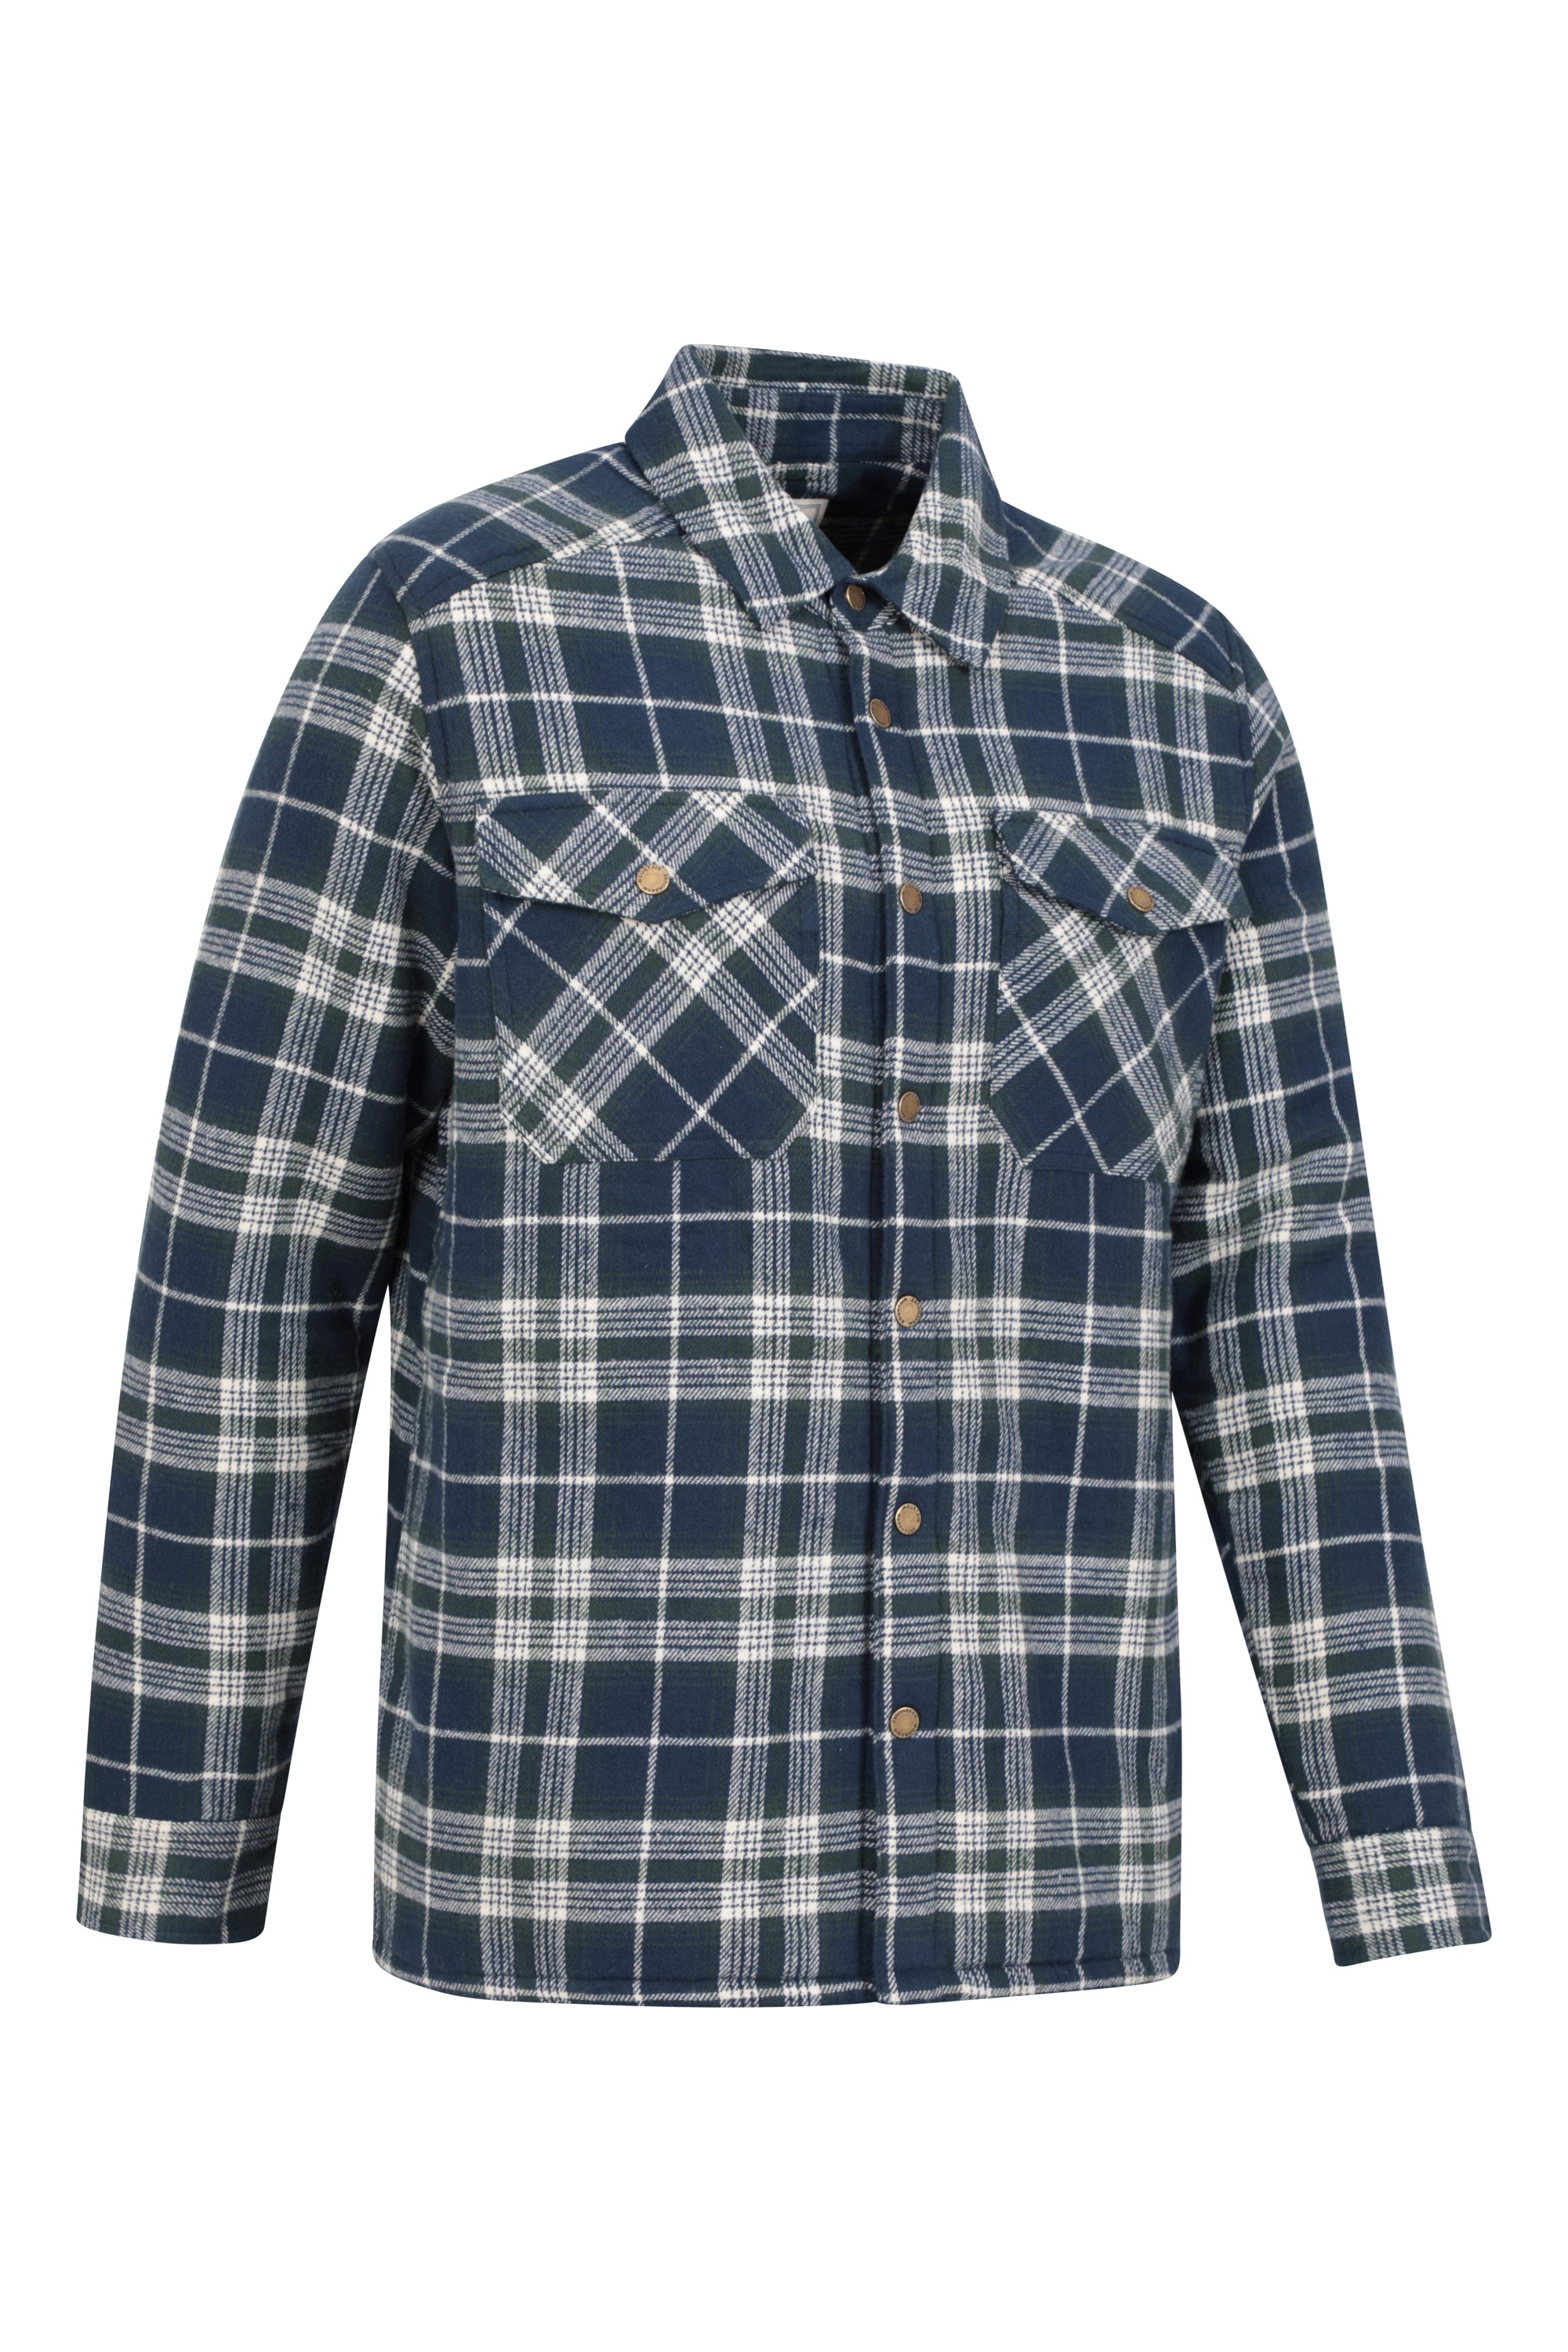 Mountain Warehouse Pinn Mens Sherpa Lined Flannel Shirt - Dark Blue | Size 3XL